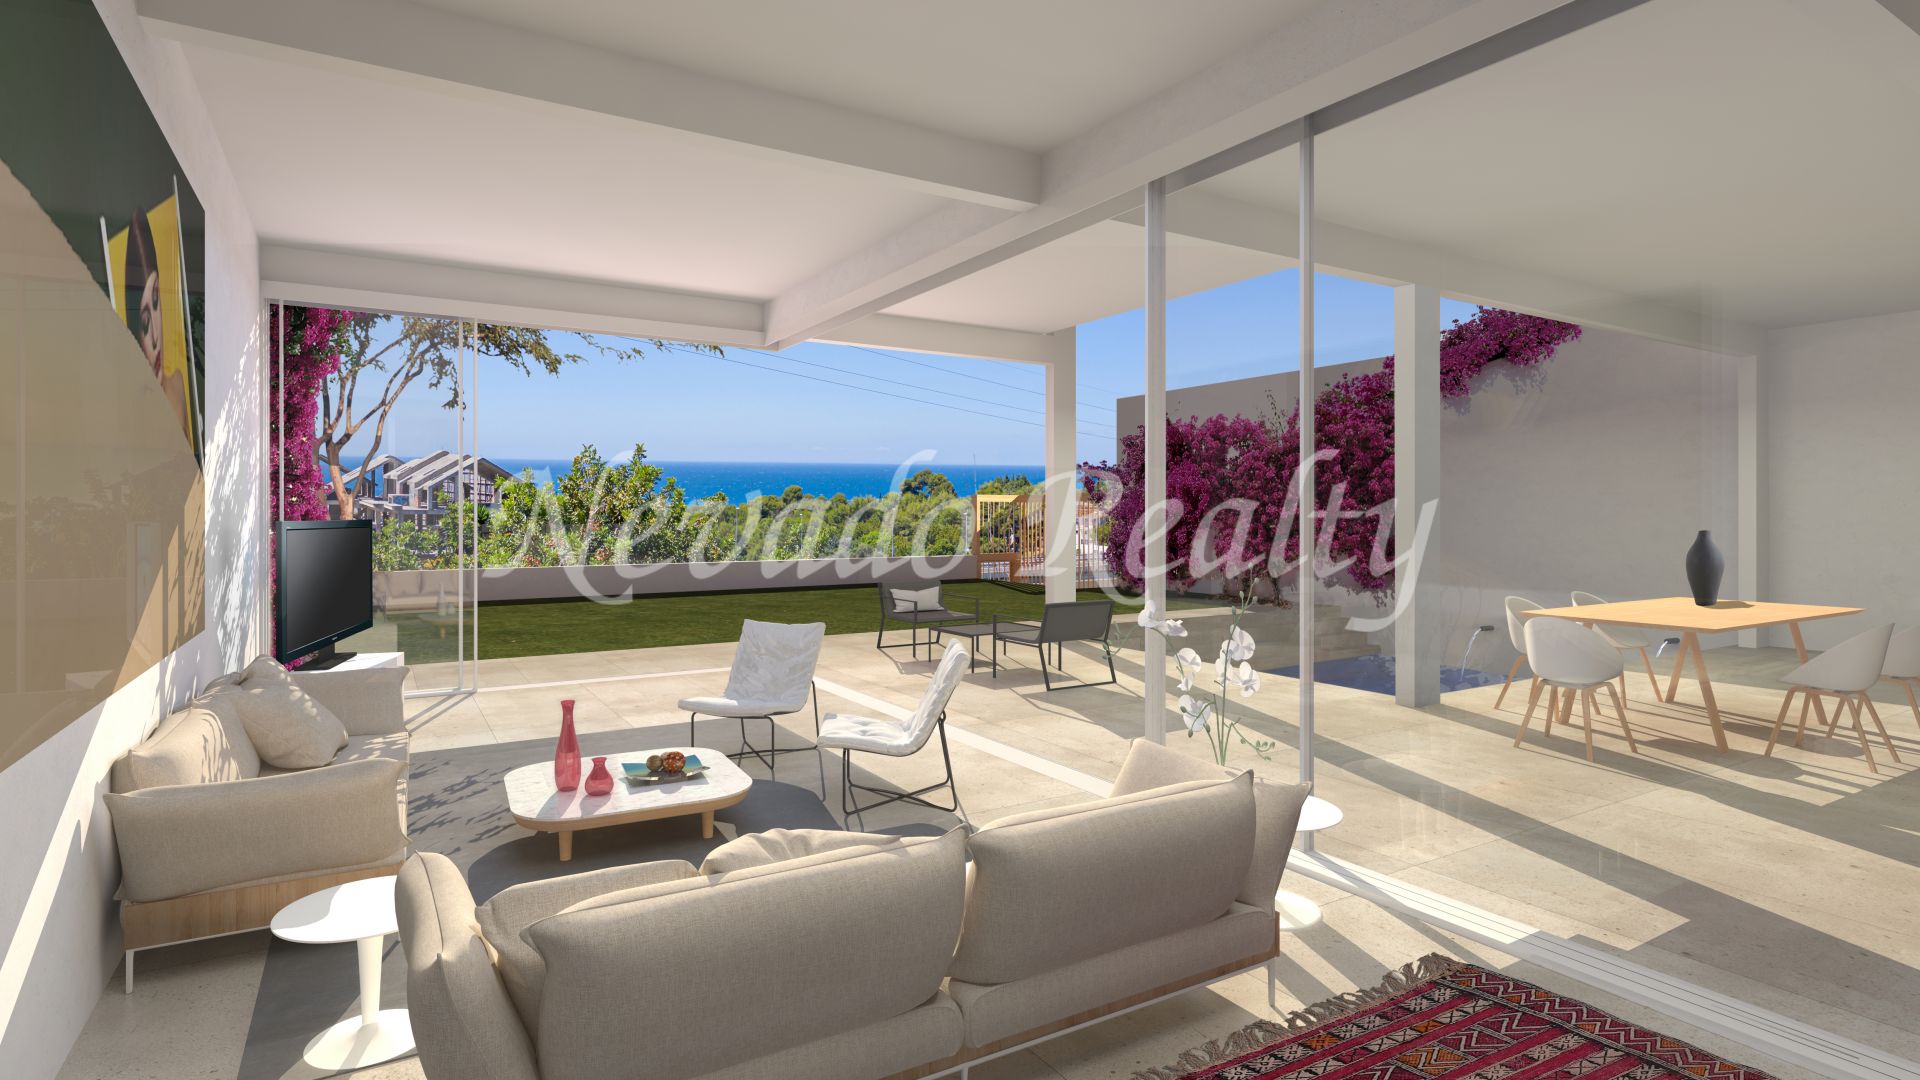 Villa en construction à vendre dans un quartier résidentiel de Marbella